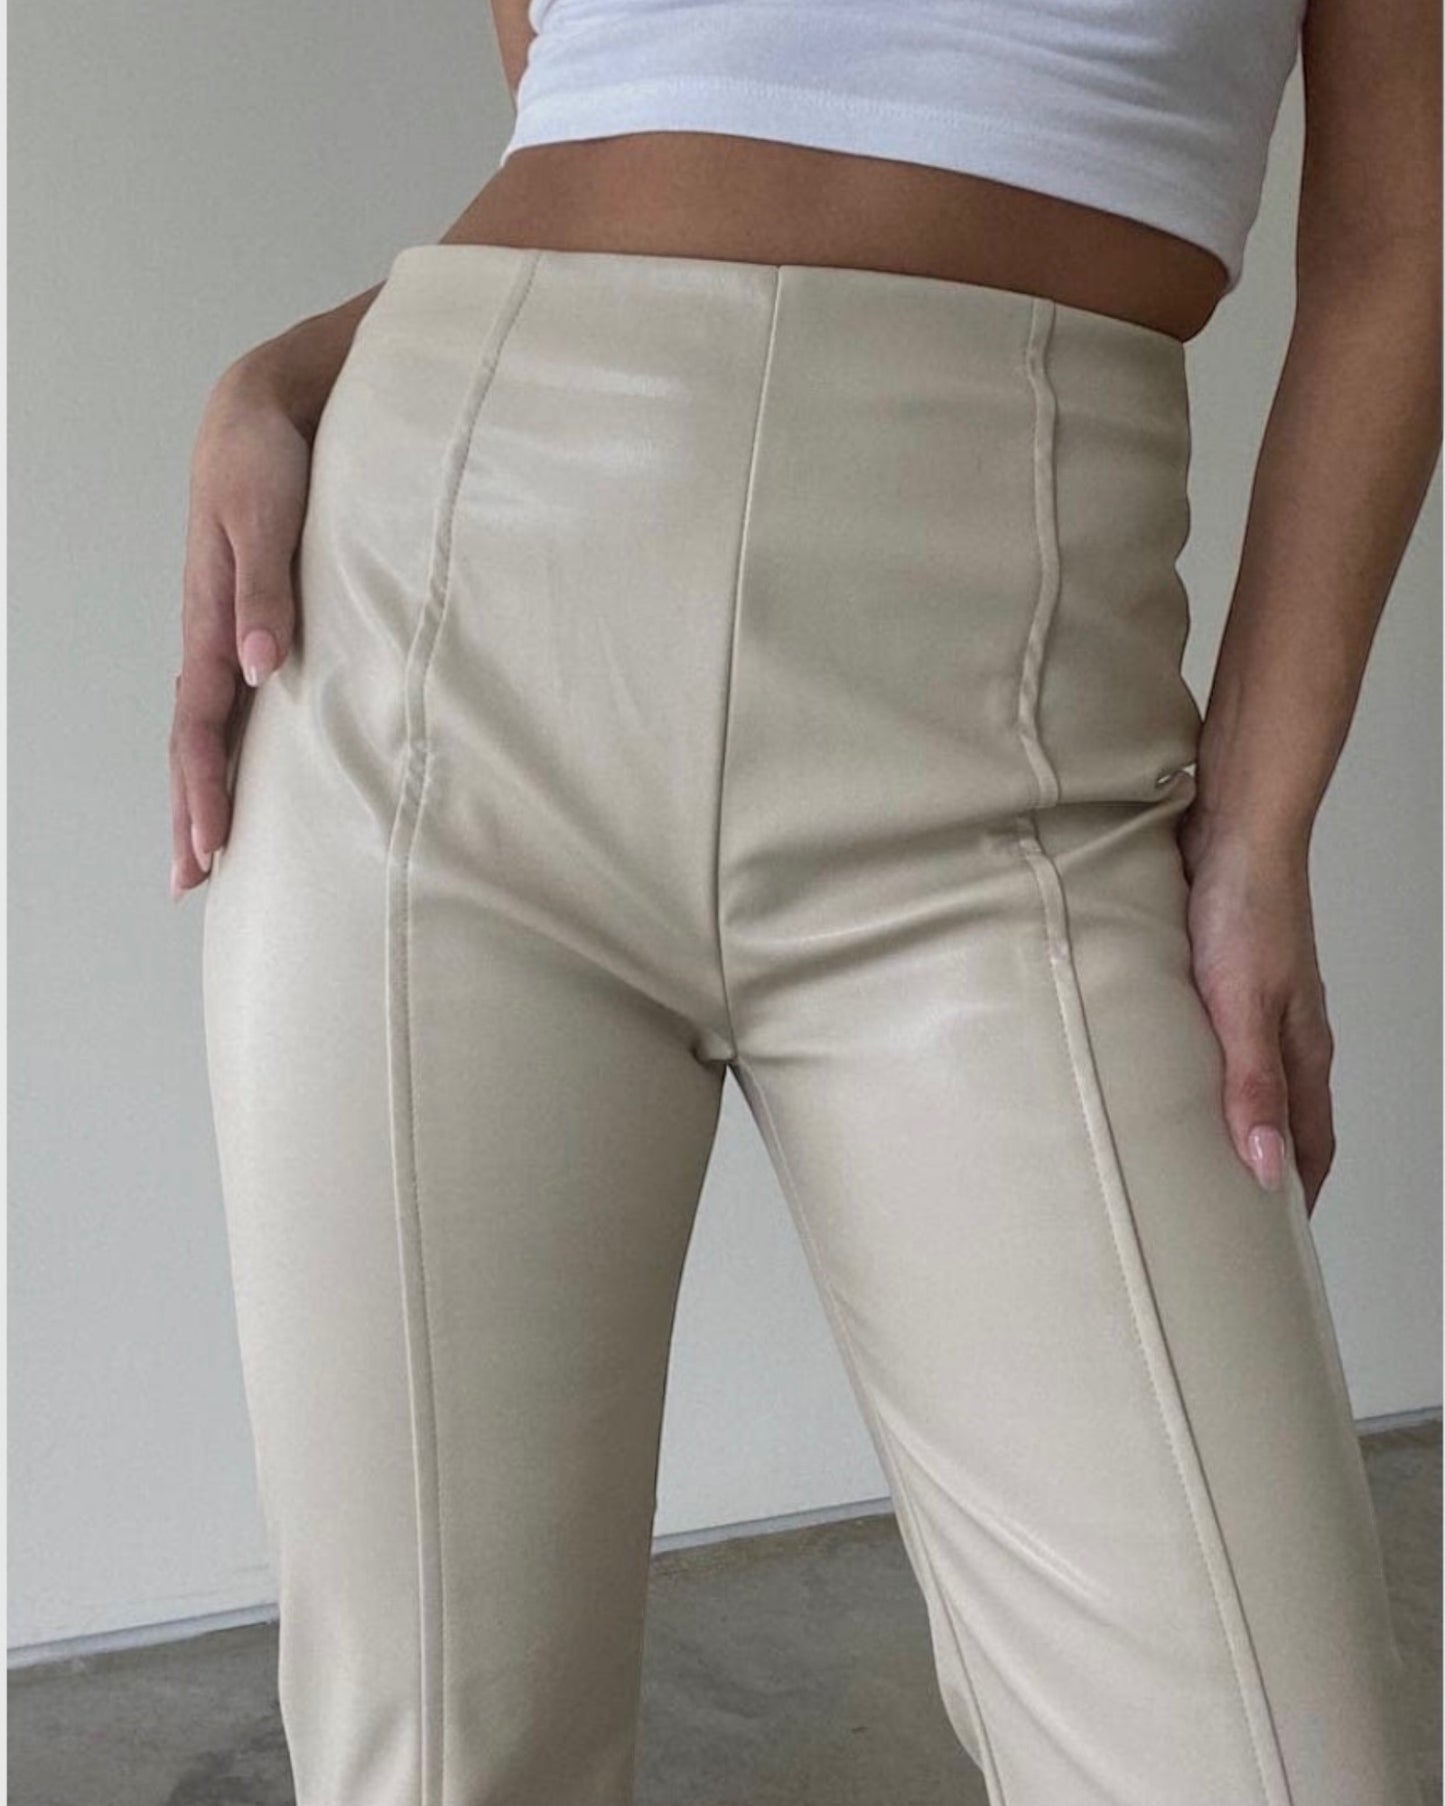 Latte Leather Pants